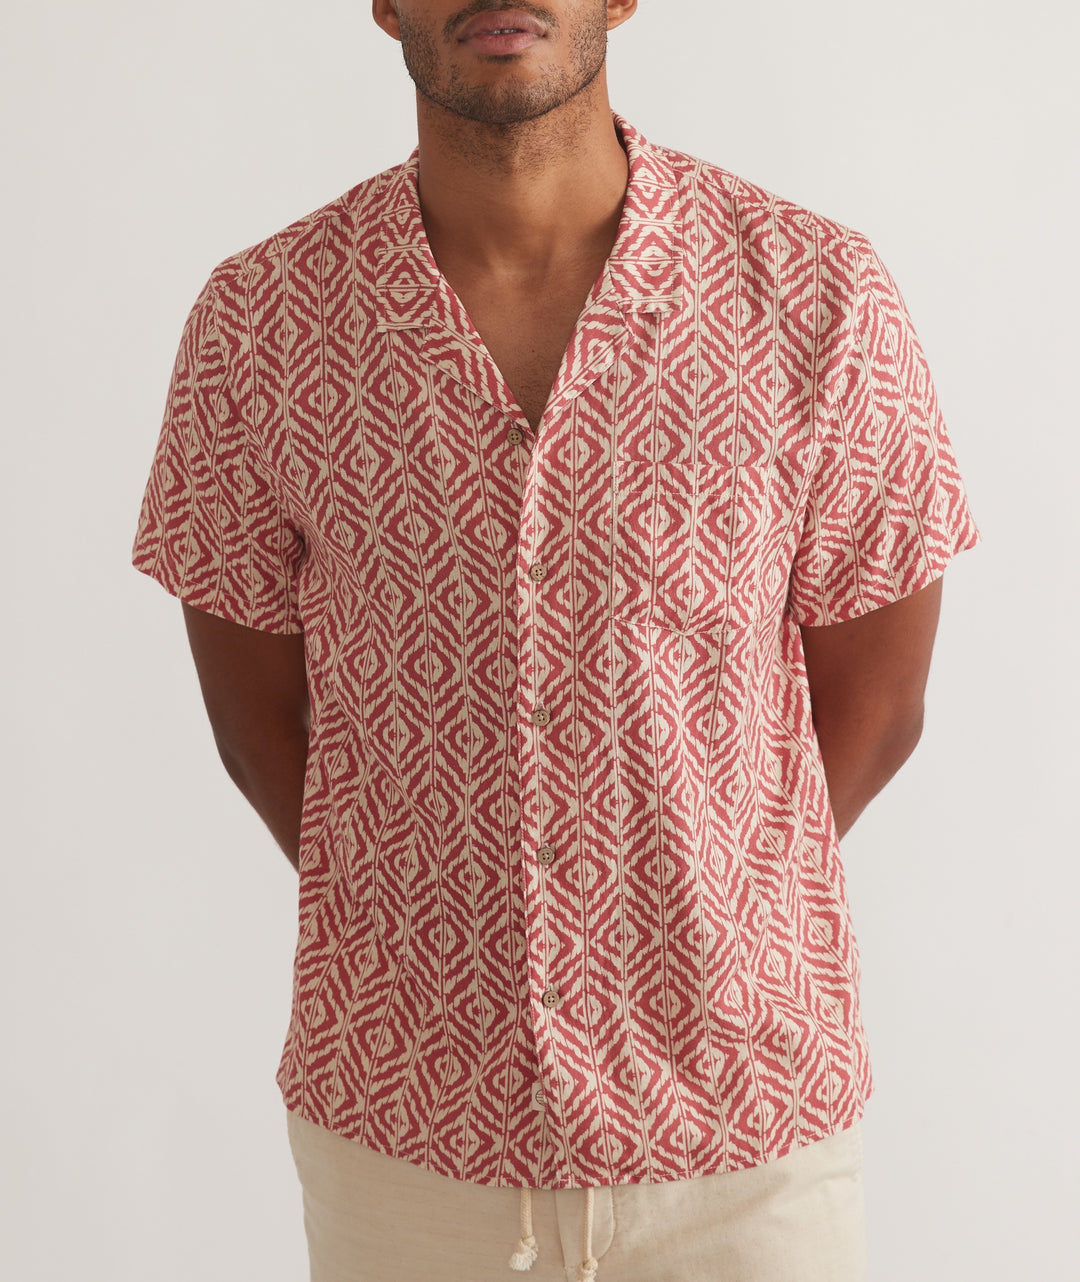 Marine Layer Tencel Linen Resort Shirt